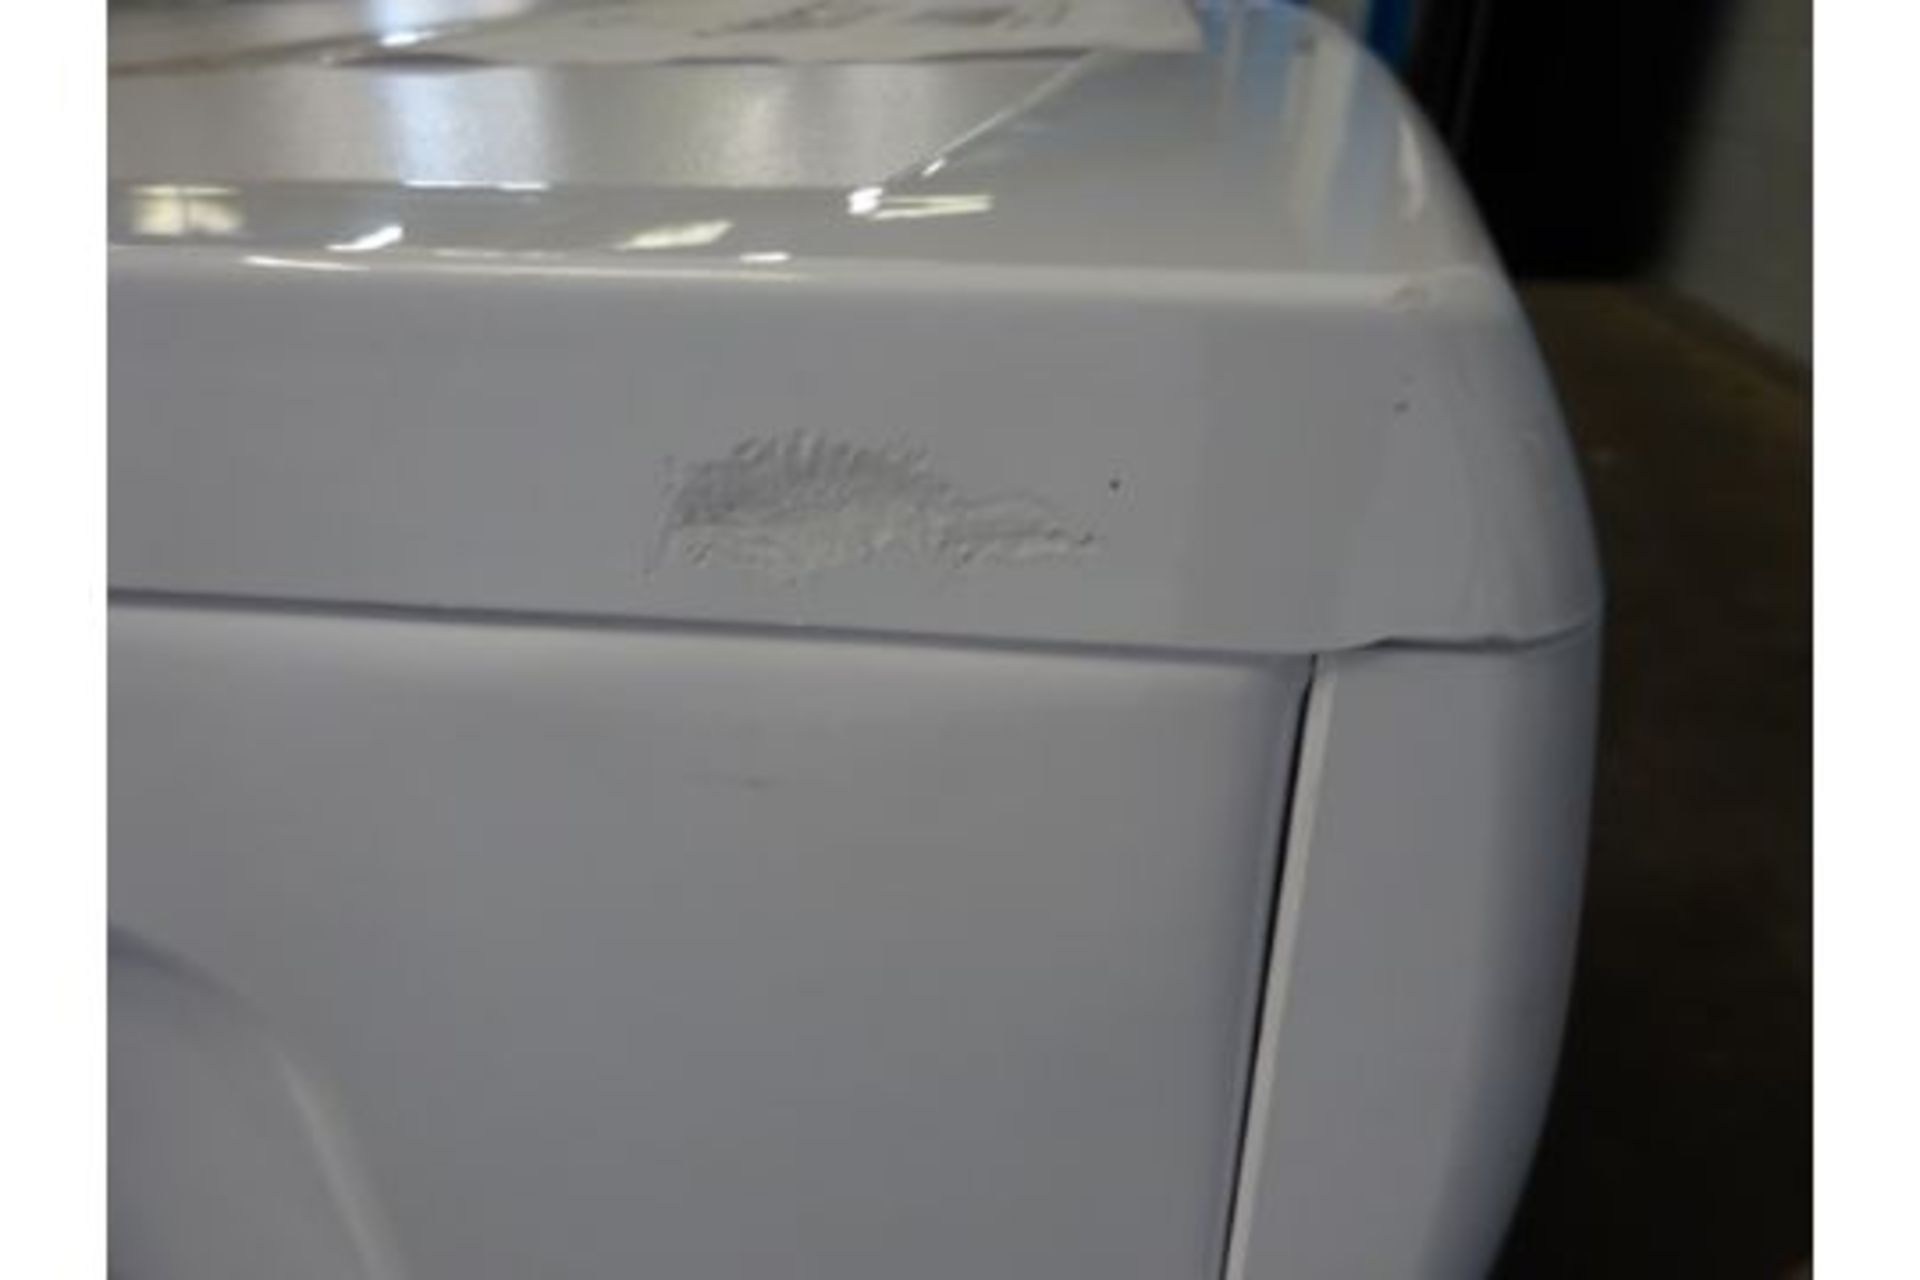 Bush WMDF612W 6KG 1200 Spin Washing Machine - White - ARGOS RRP £179.99 - Image 4 of 6